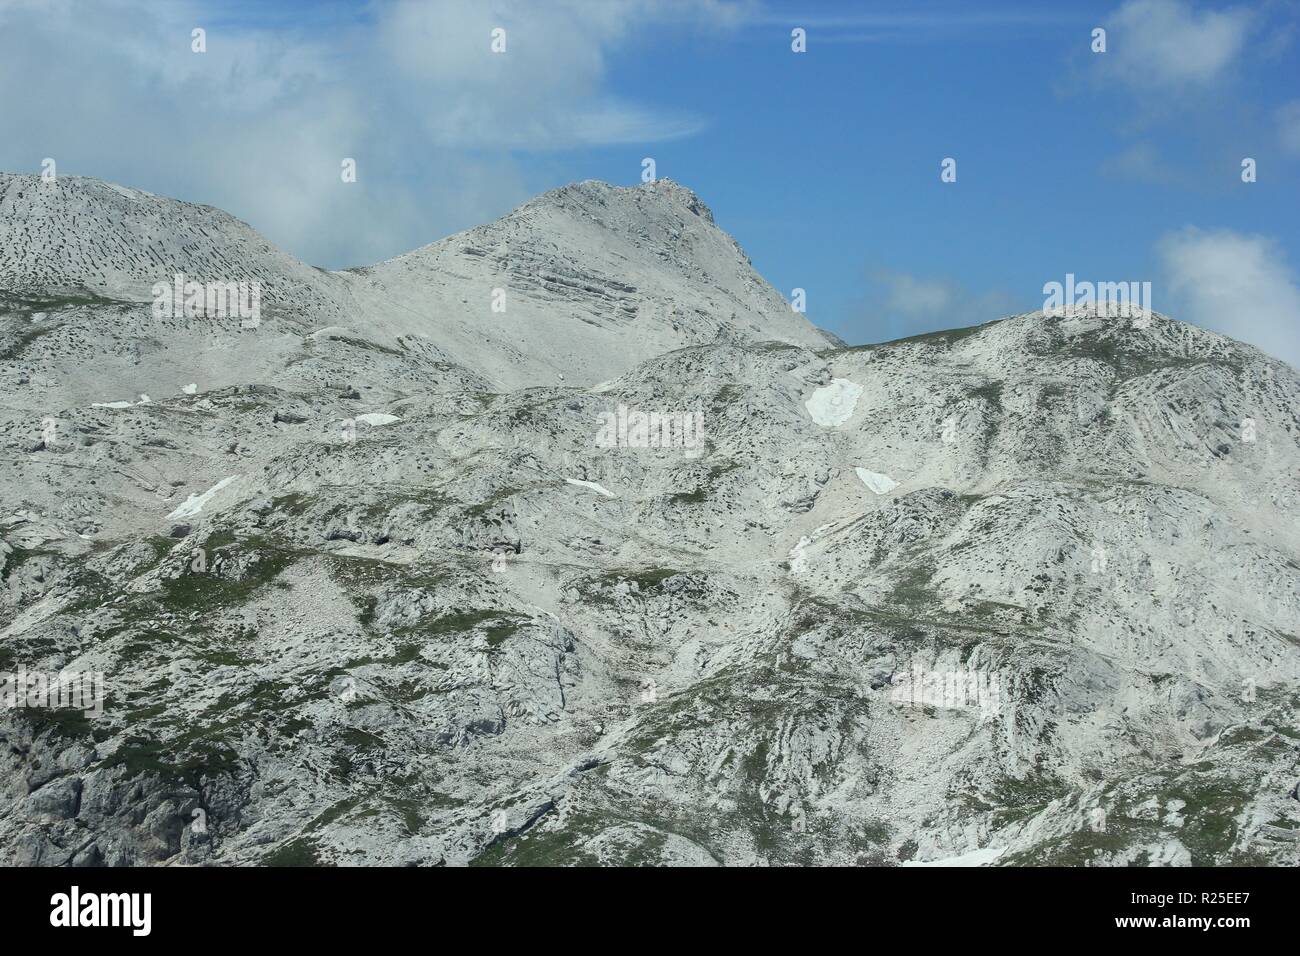 Krn Mountains - World War I battlefield scenery, aerial photo, Julian Alps landscape, Alpe Adria trail, Slovenia, central Europe Stock Photo